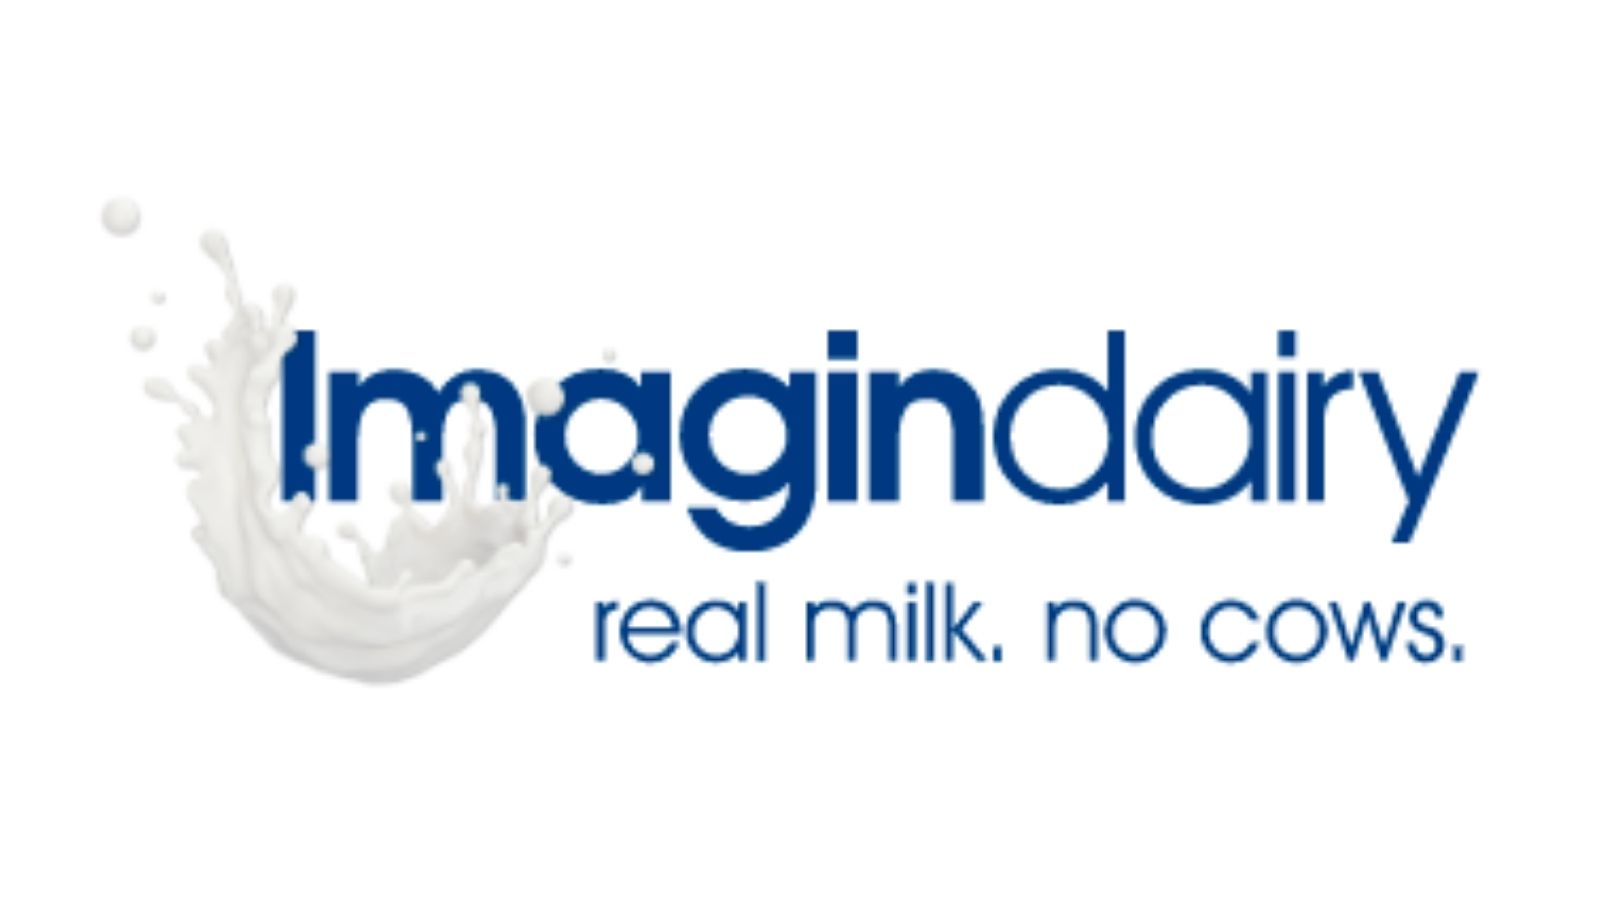 lmagindairy —正在创造与真实事物无法区分的真正牛奶蛋白质